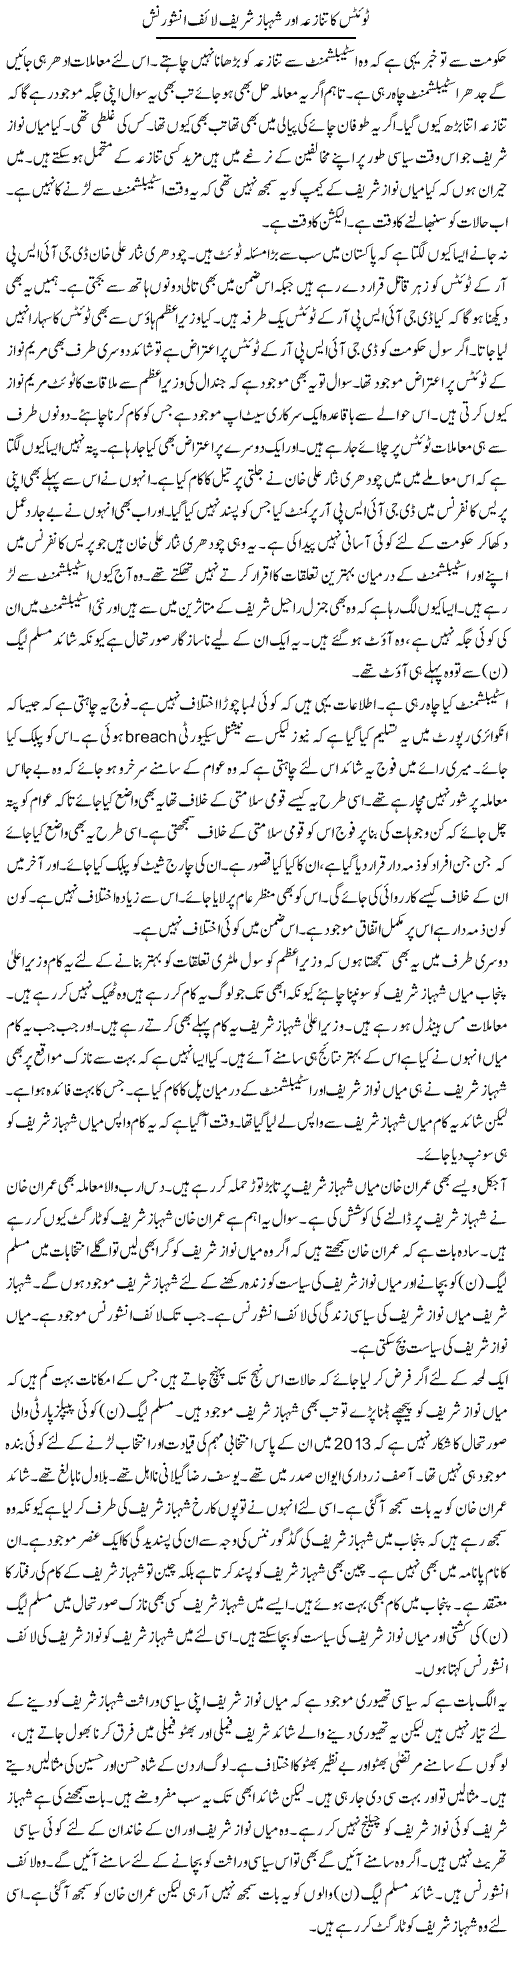 Tweets Ka Tanaza Aur Shahbaz Shareef Life Insurance | Muzamal Suharwardy | Daily Urdu Columns